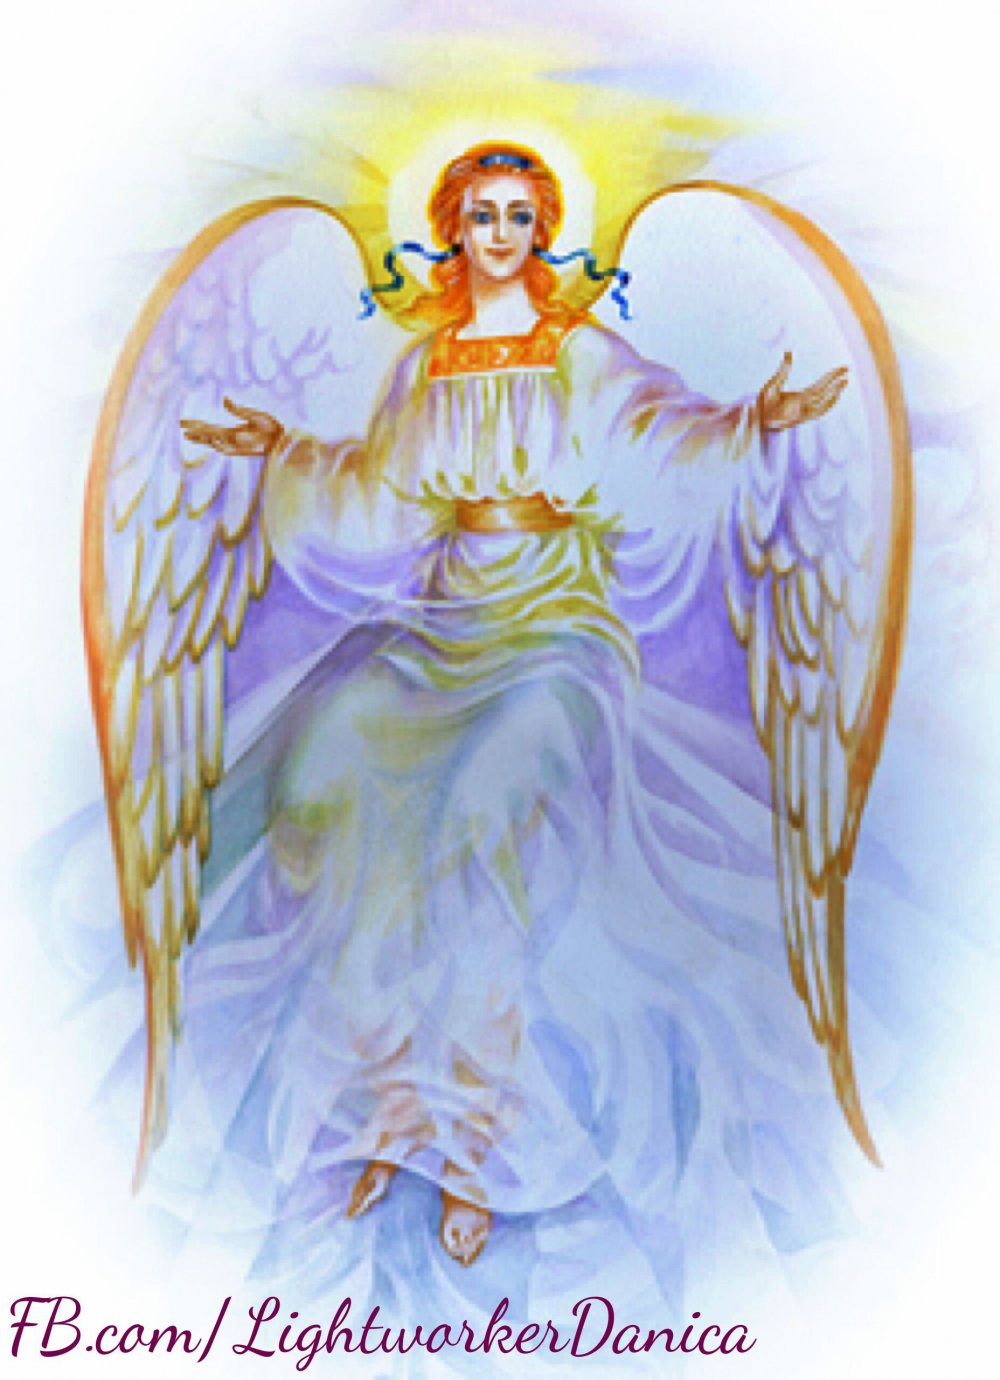 Картина ангела с крыльями